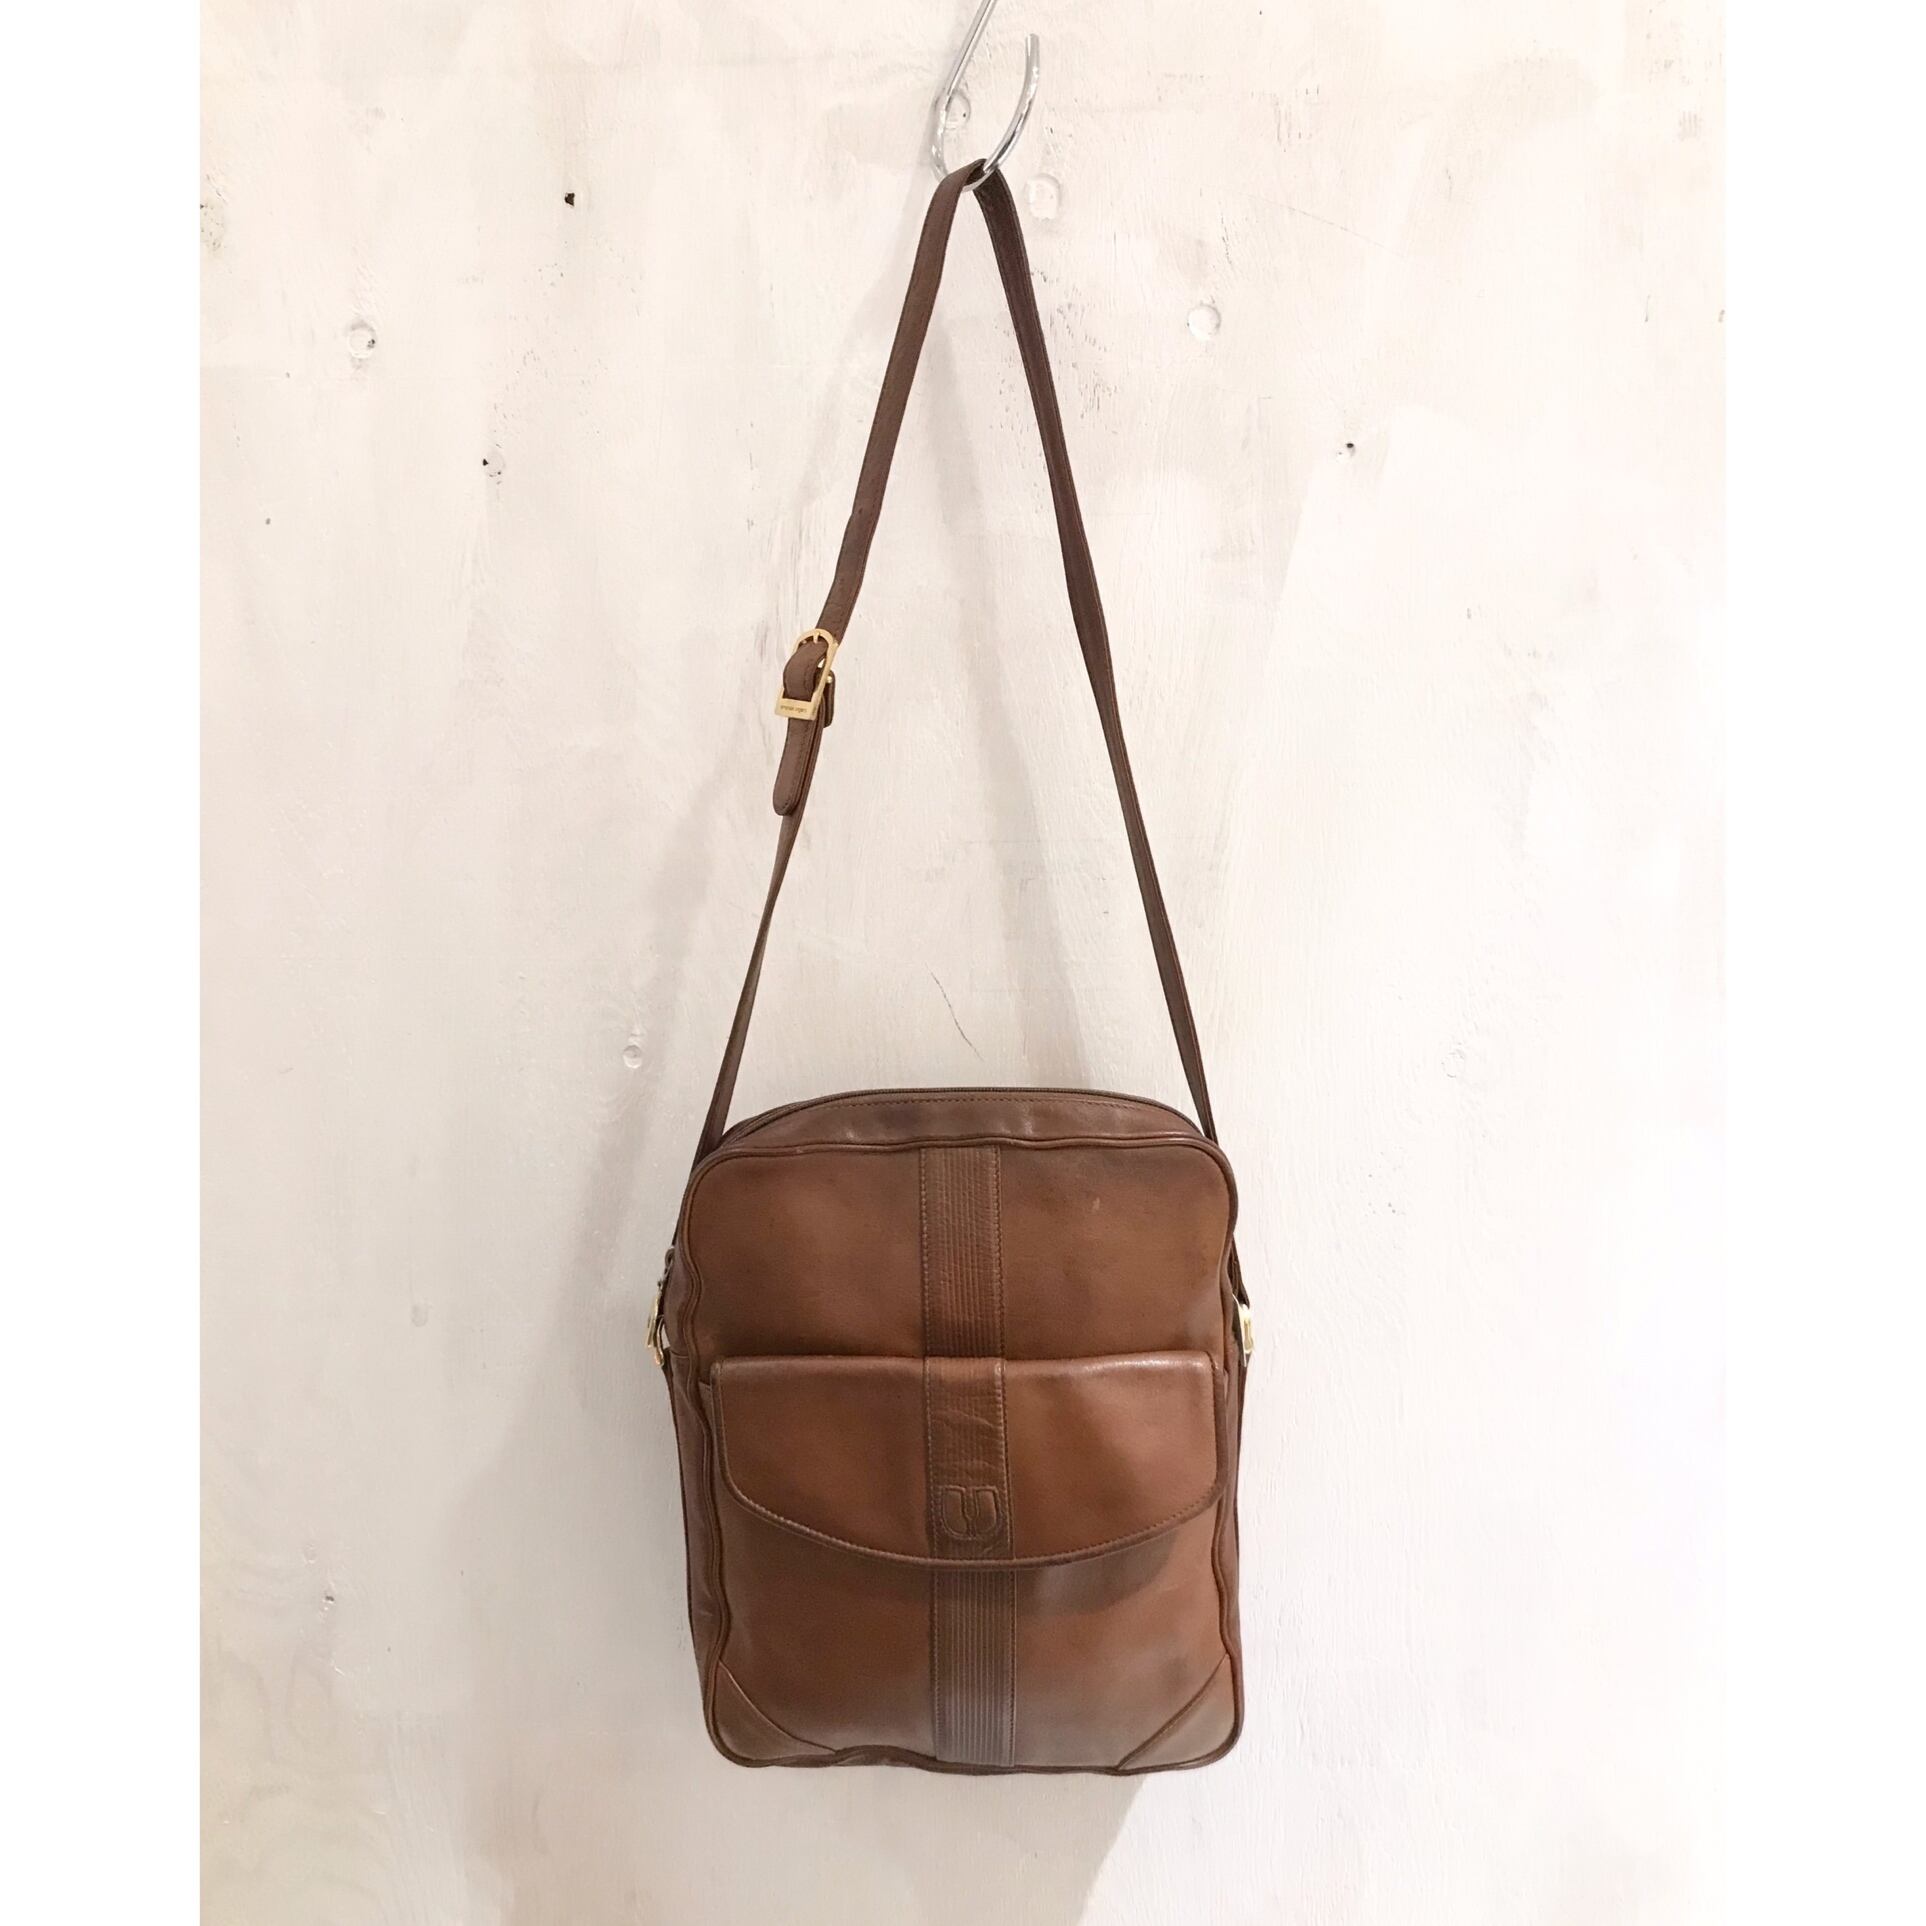 emanuel ungaro/vintage/shoulderbag/brown/leather/エマニュエル